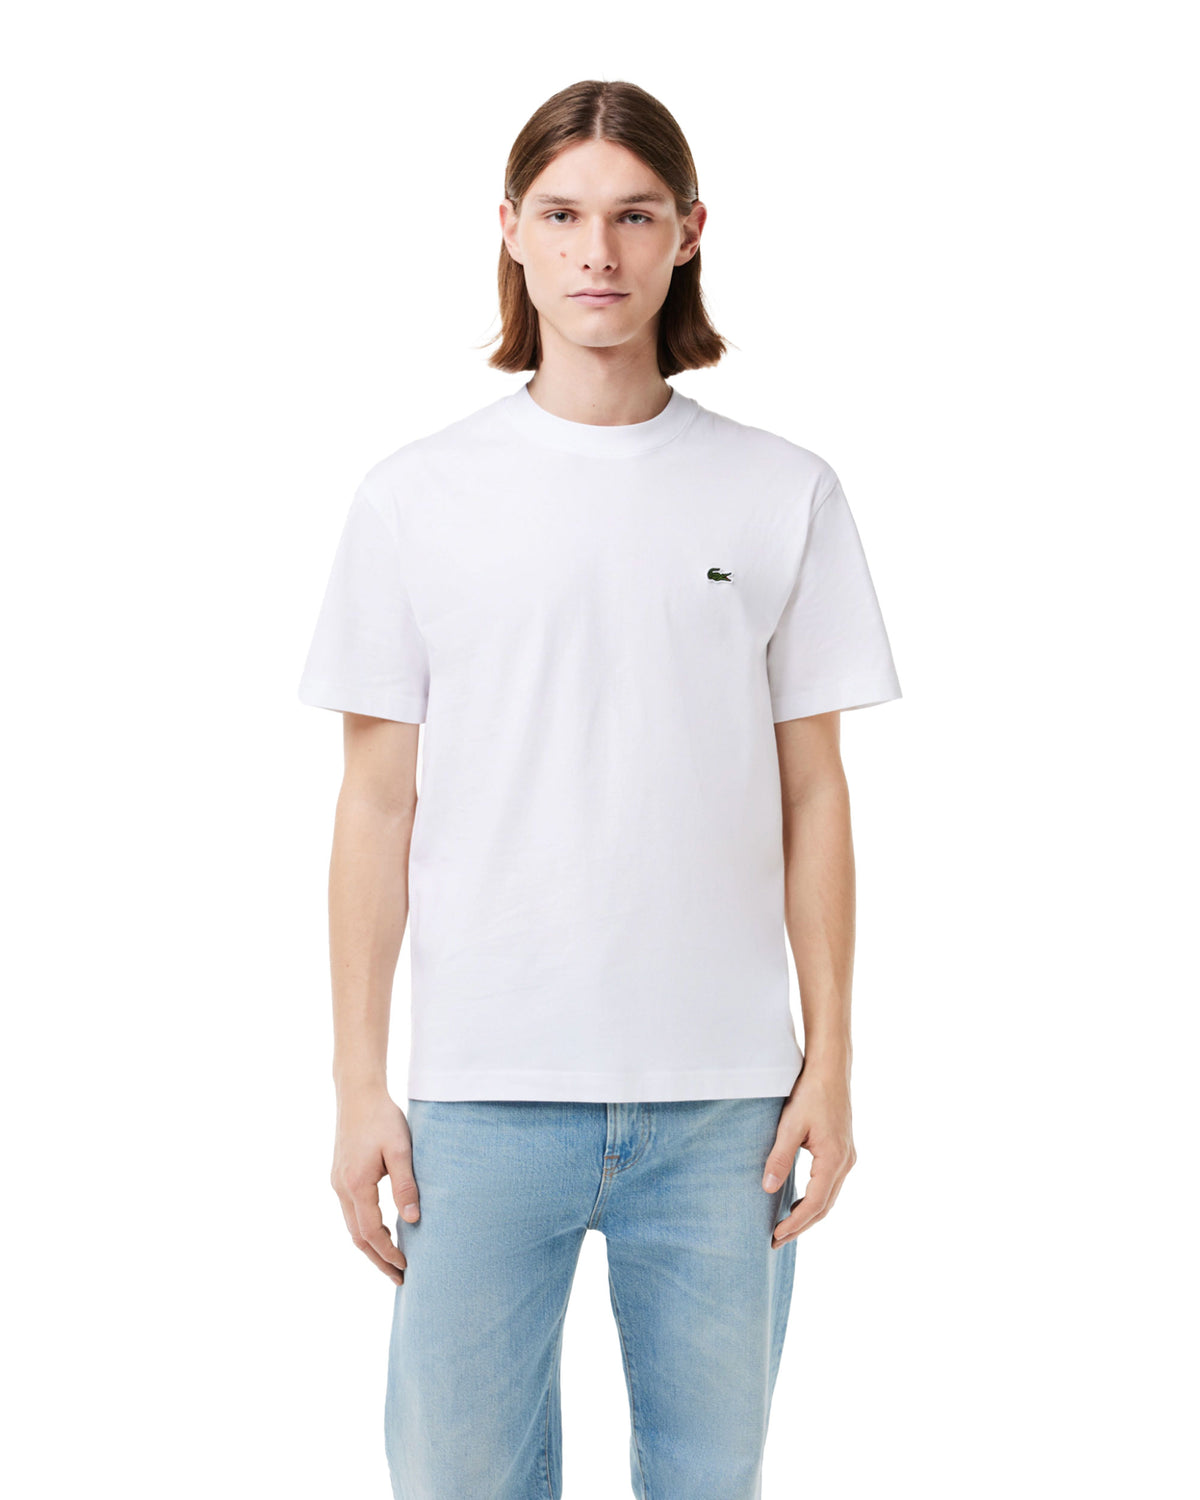 T-Shirt Uomo Lacoste Classic Logo Bianco